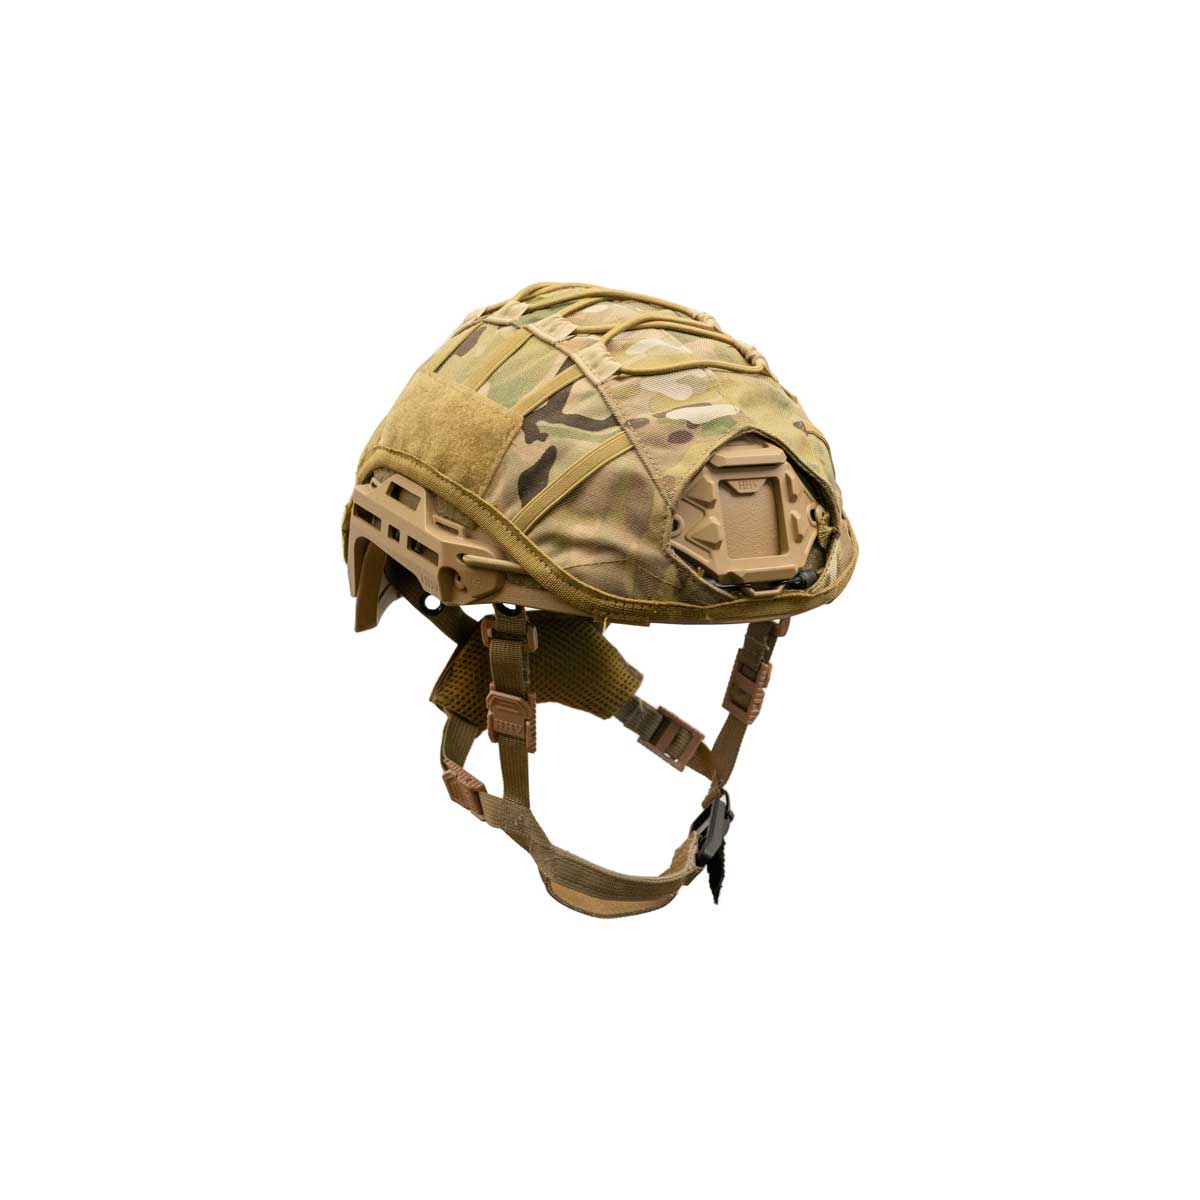 Multicam helmet cover